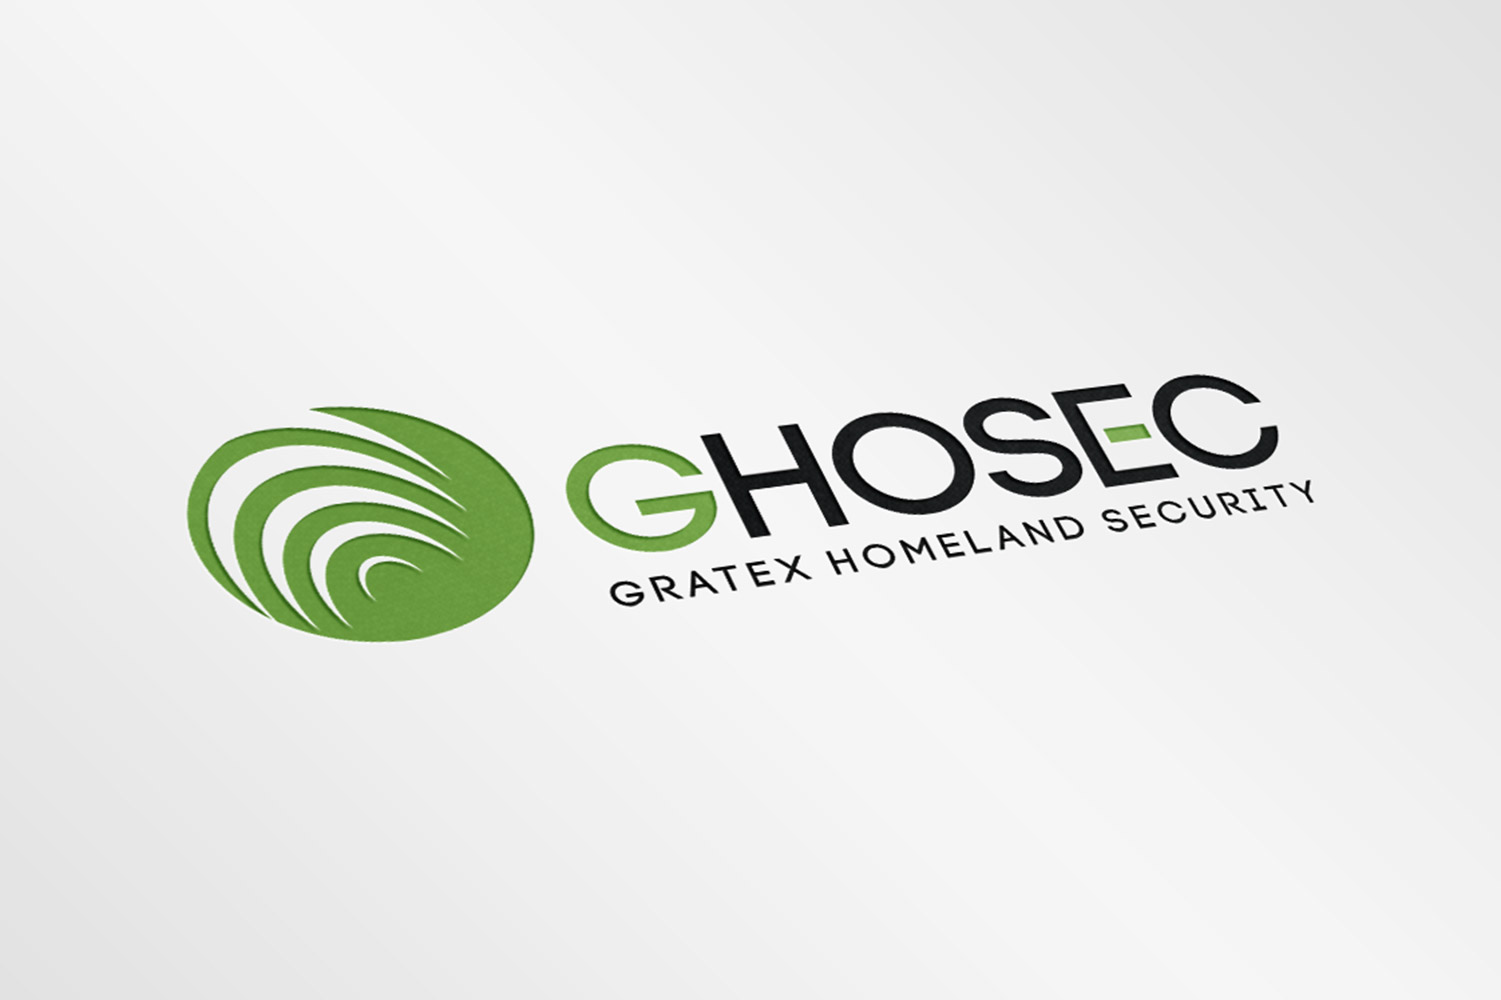 GHOSEC logo design image